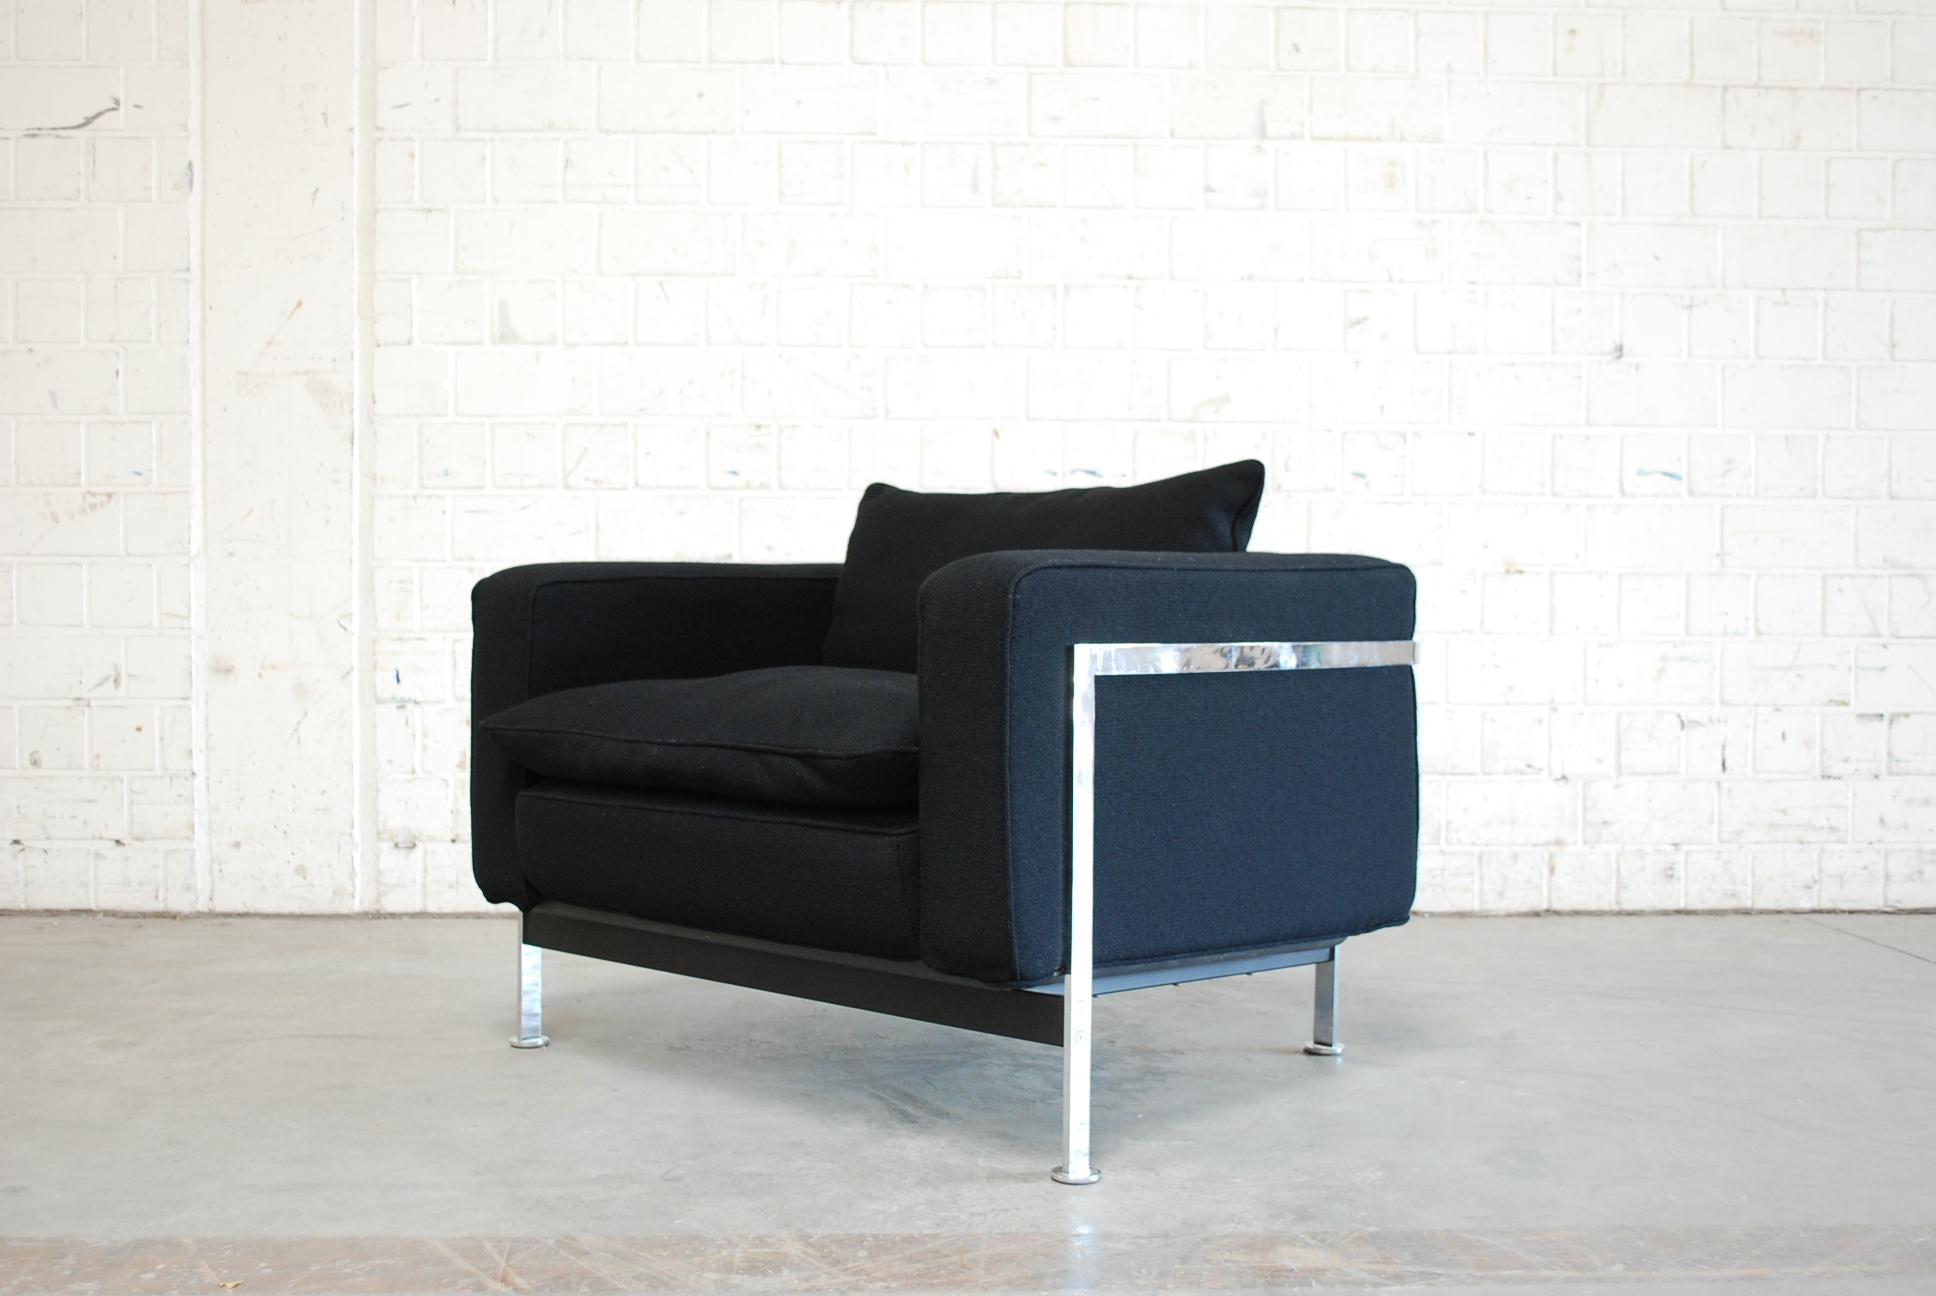 Robert Haussmann De Sede Rh 302 Sofa and Armchair Black For Sale 10